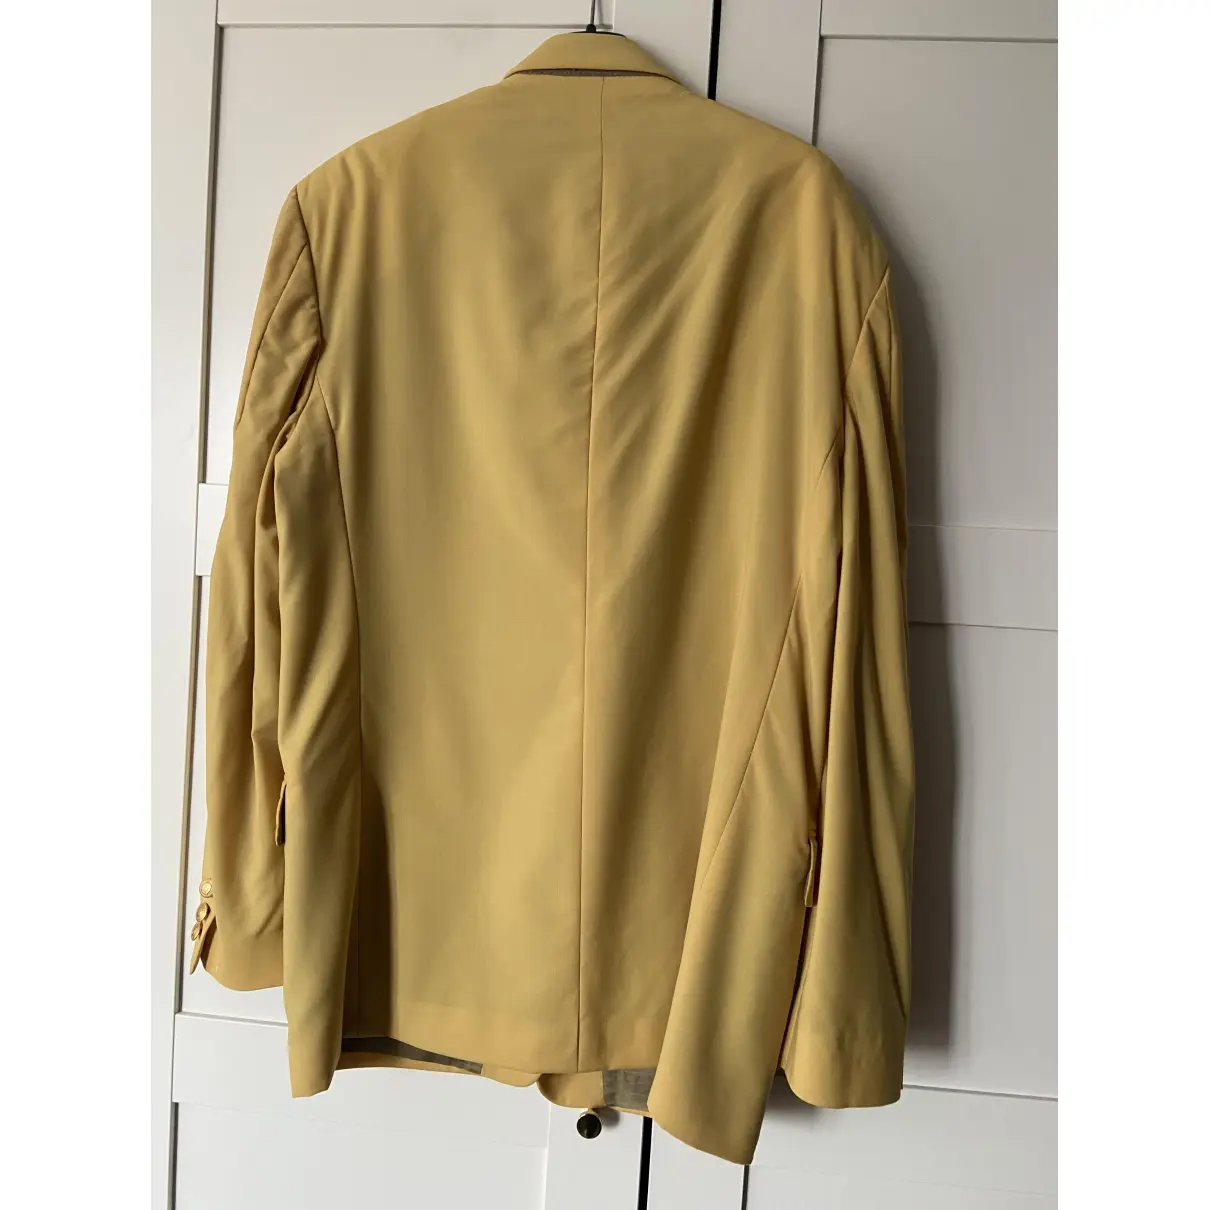 Buy Kenzo Wool jacket online